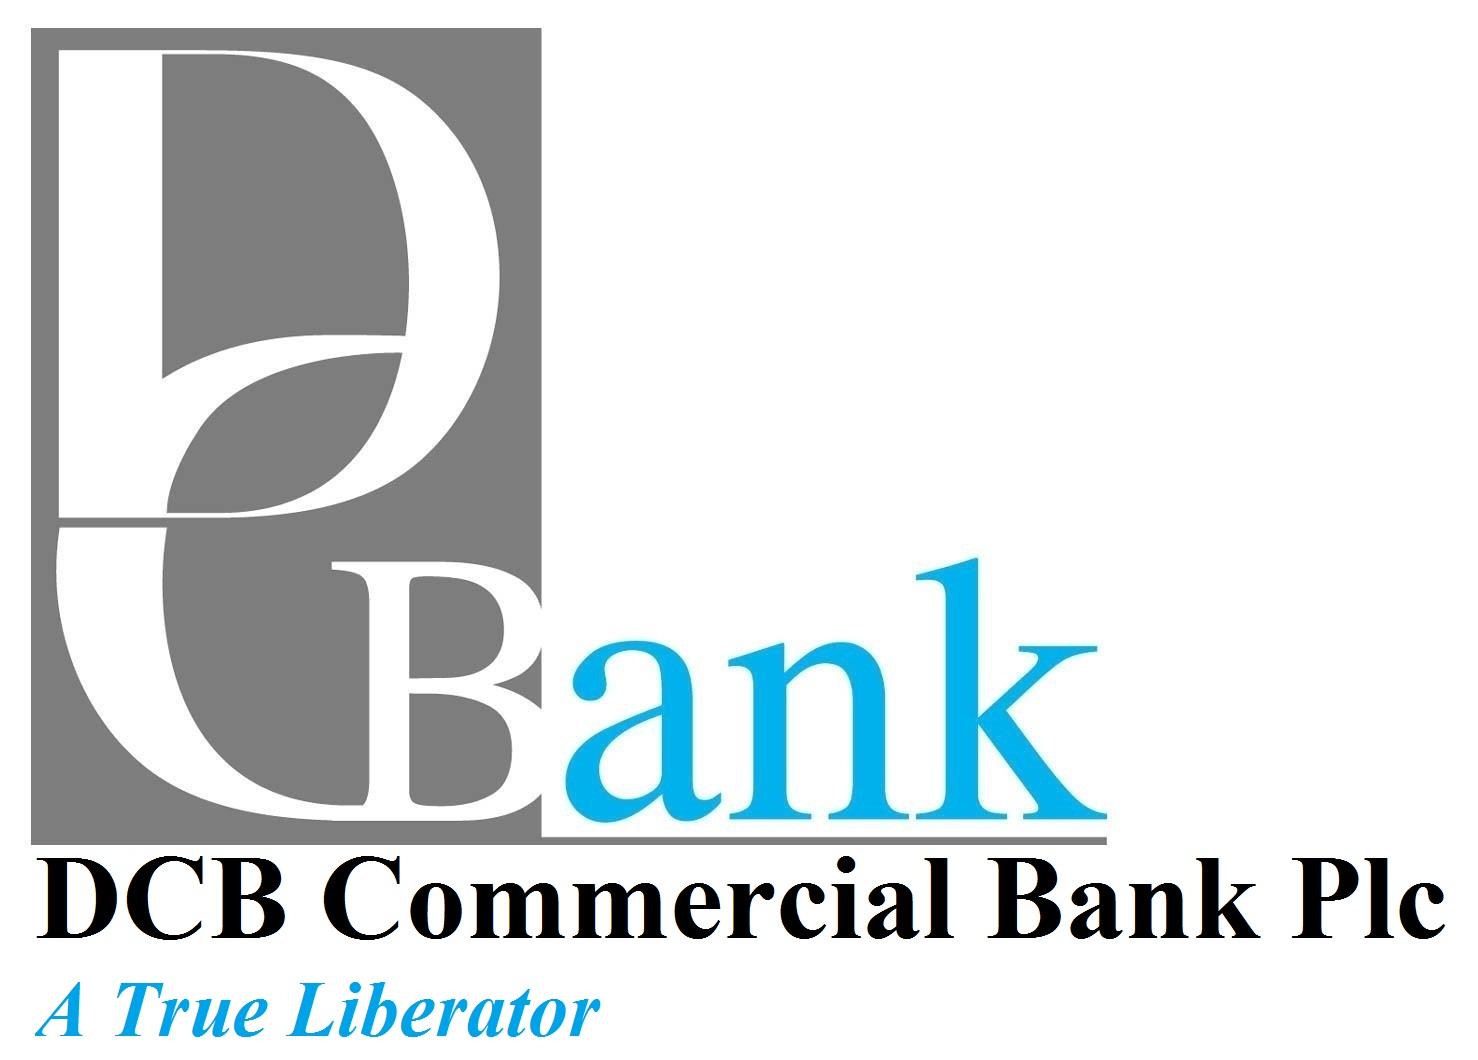 DCB Logo - DCB Commercial Bank Plc | DCB